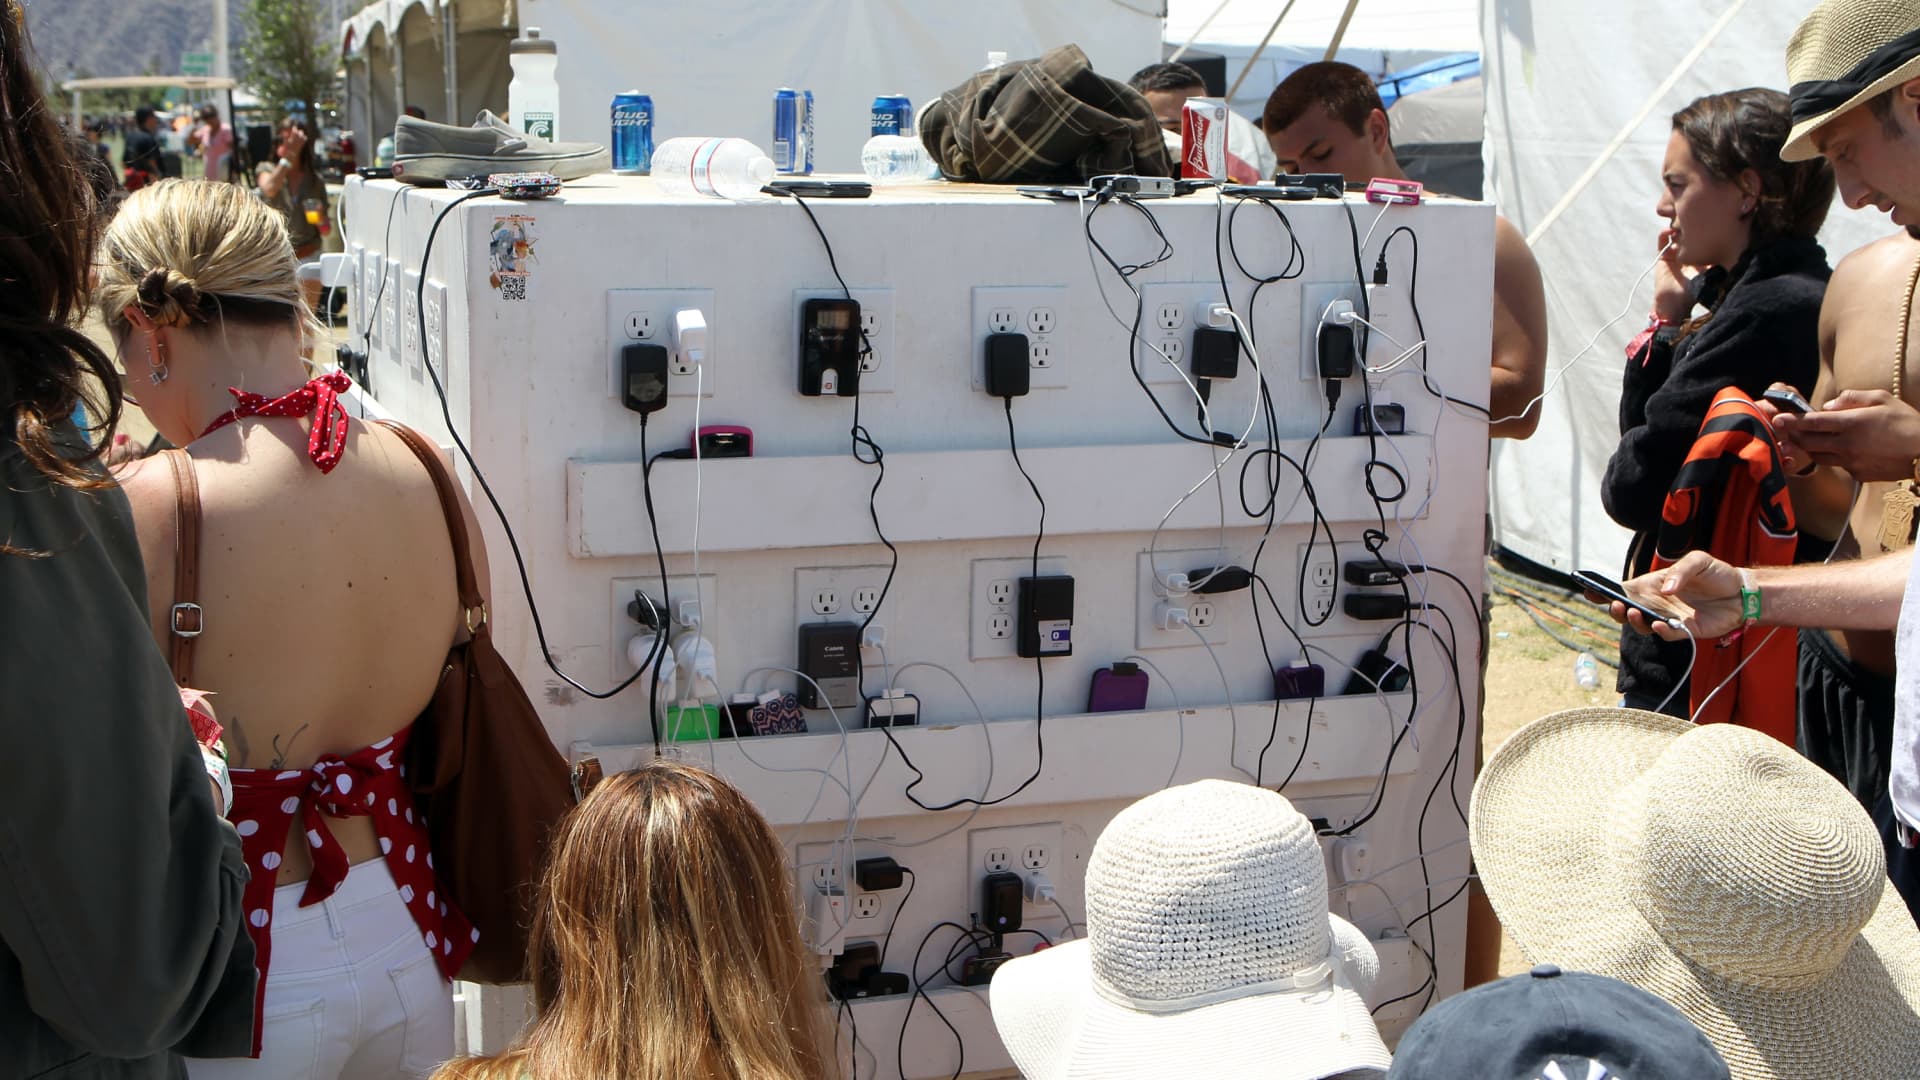 FBI warns against using public phone charging stations